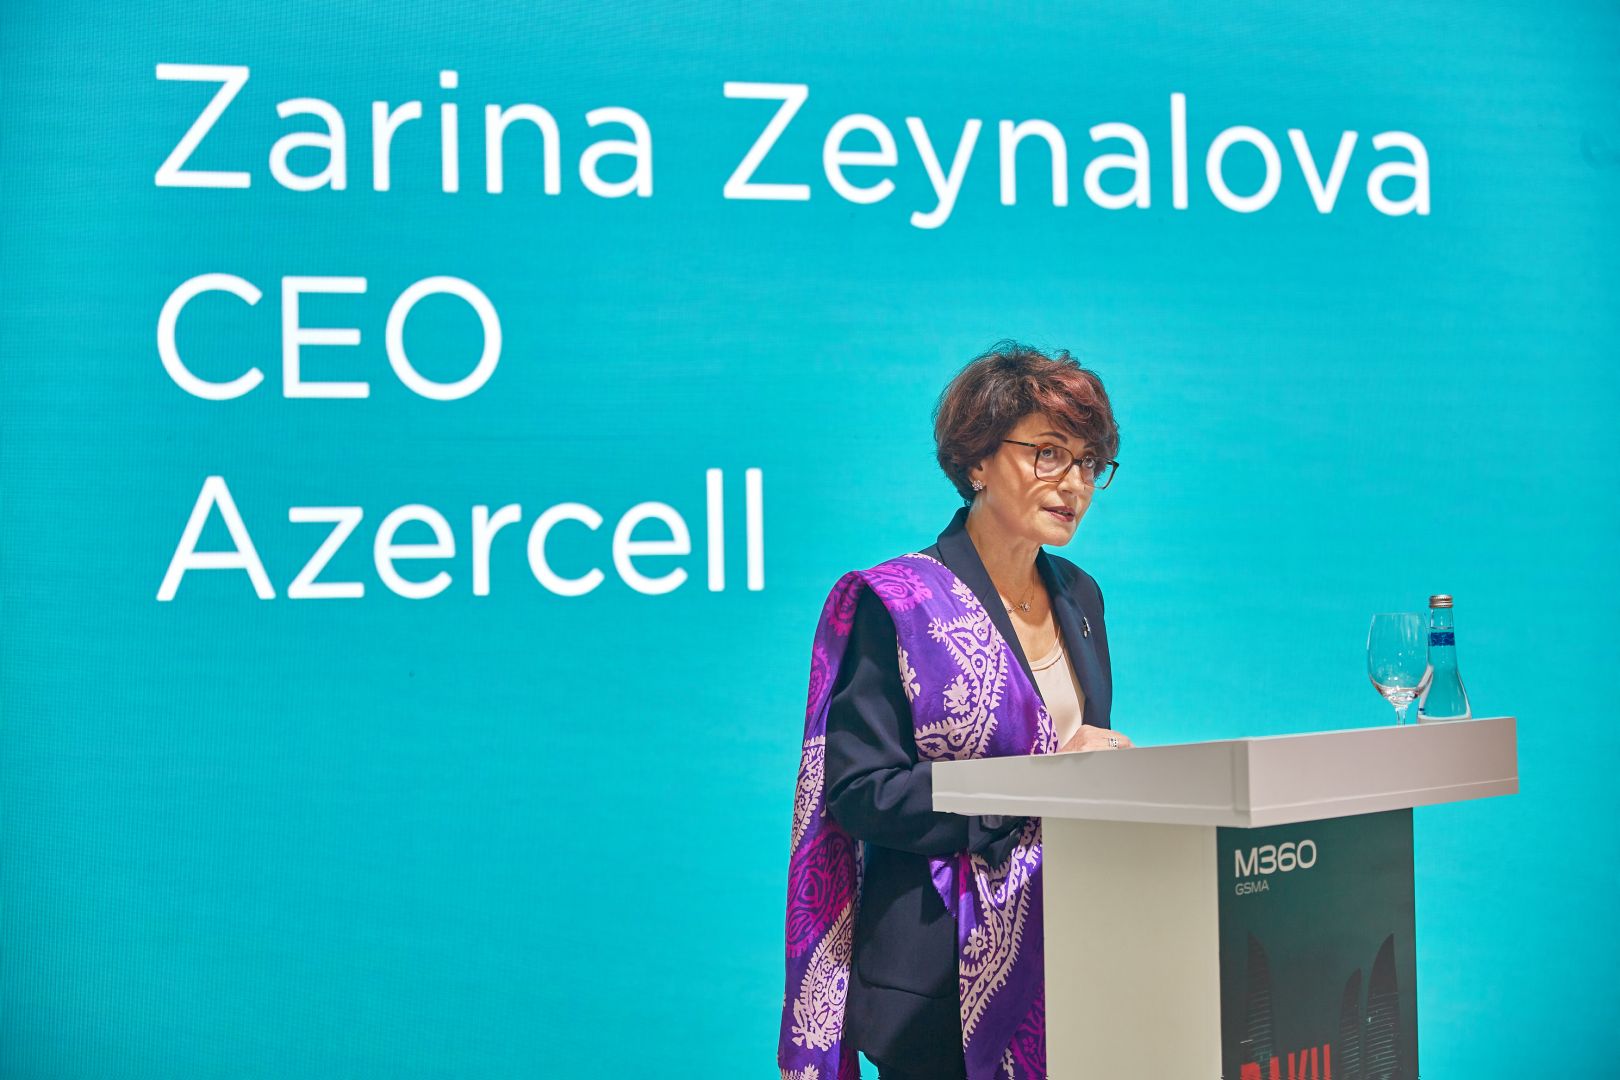 Azercell’s CEO, Zarina Zeynalova, spoke on the vital role of mobile operators in enabling digital resilience [PHOTOS]